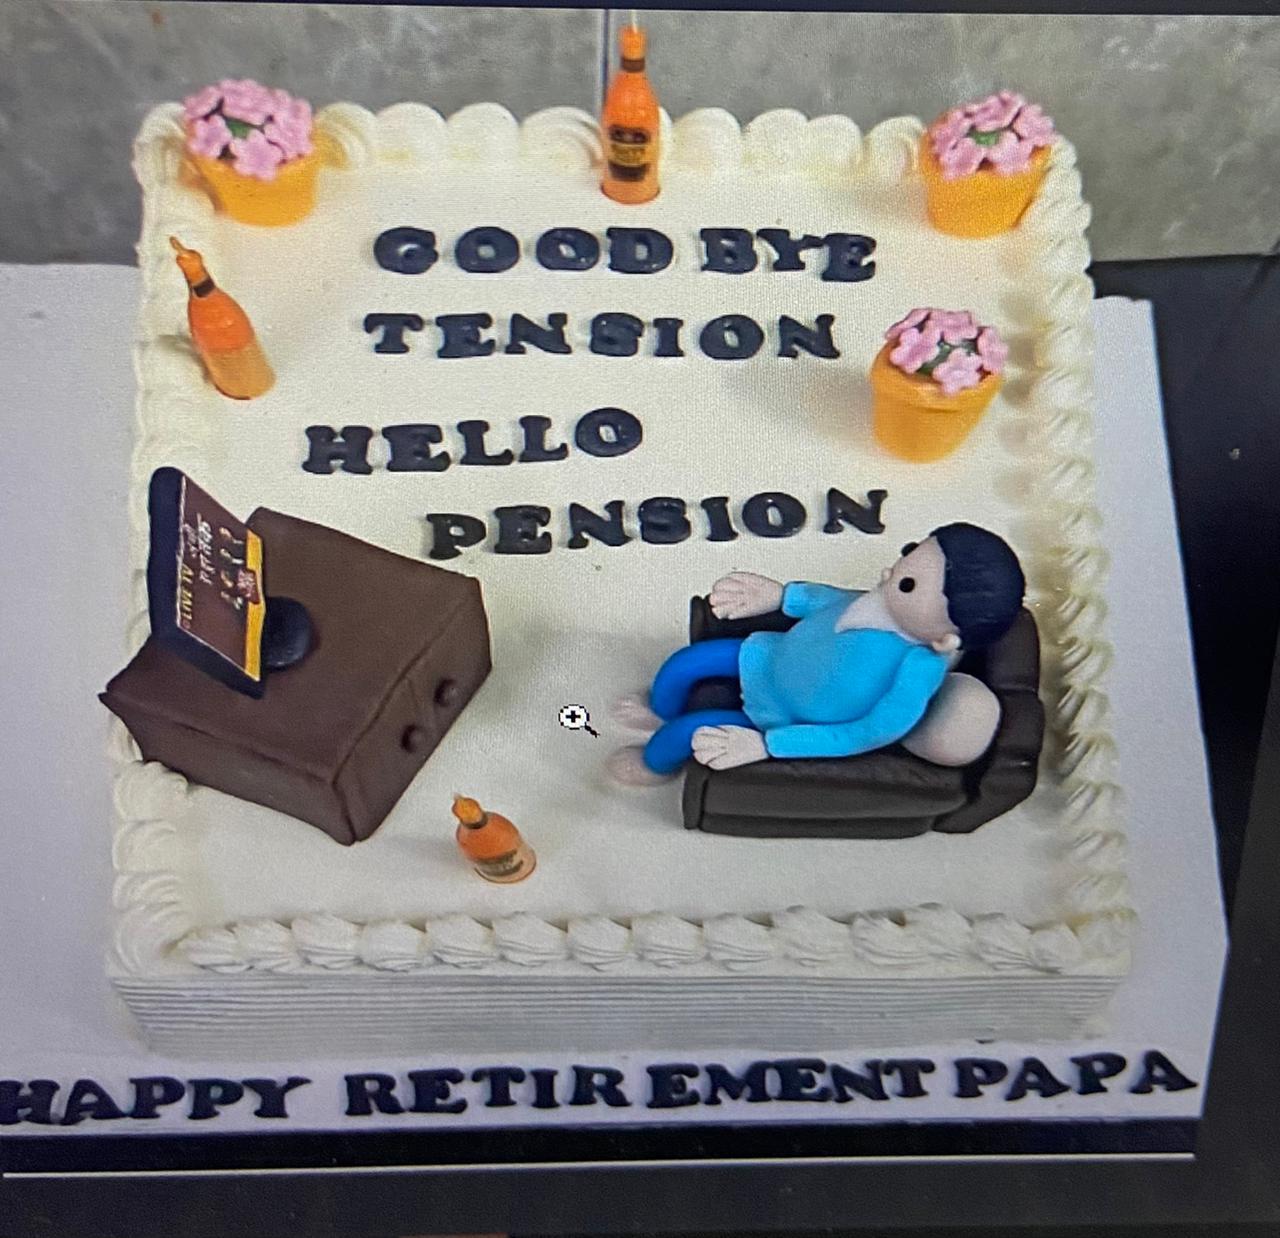 Crafty Cakes | Exeter | UK - Corporate Retirement Cake